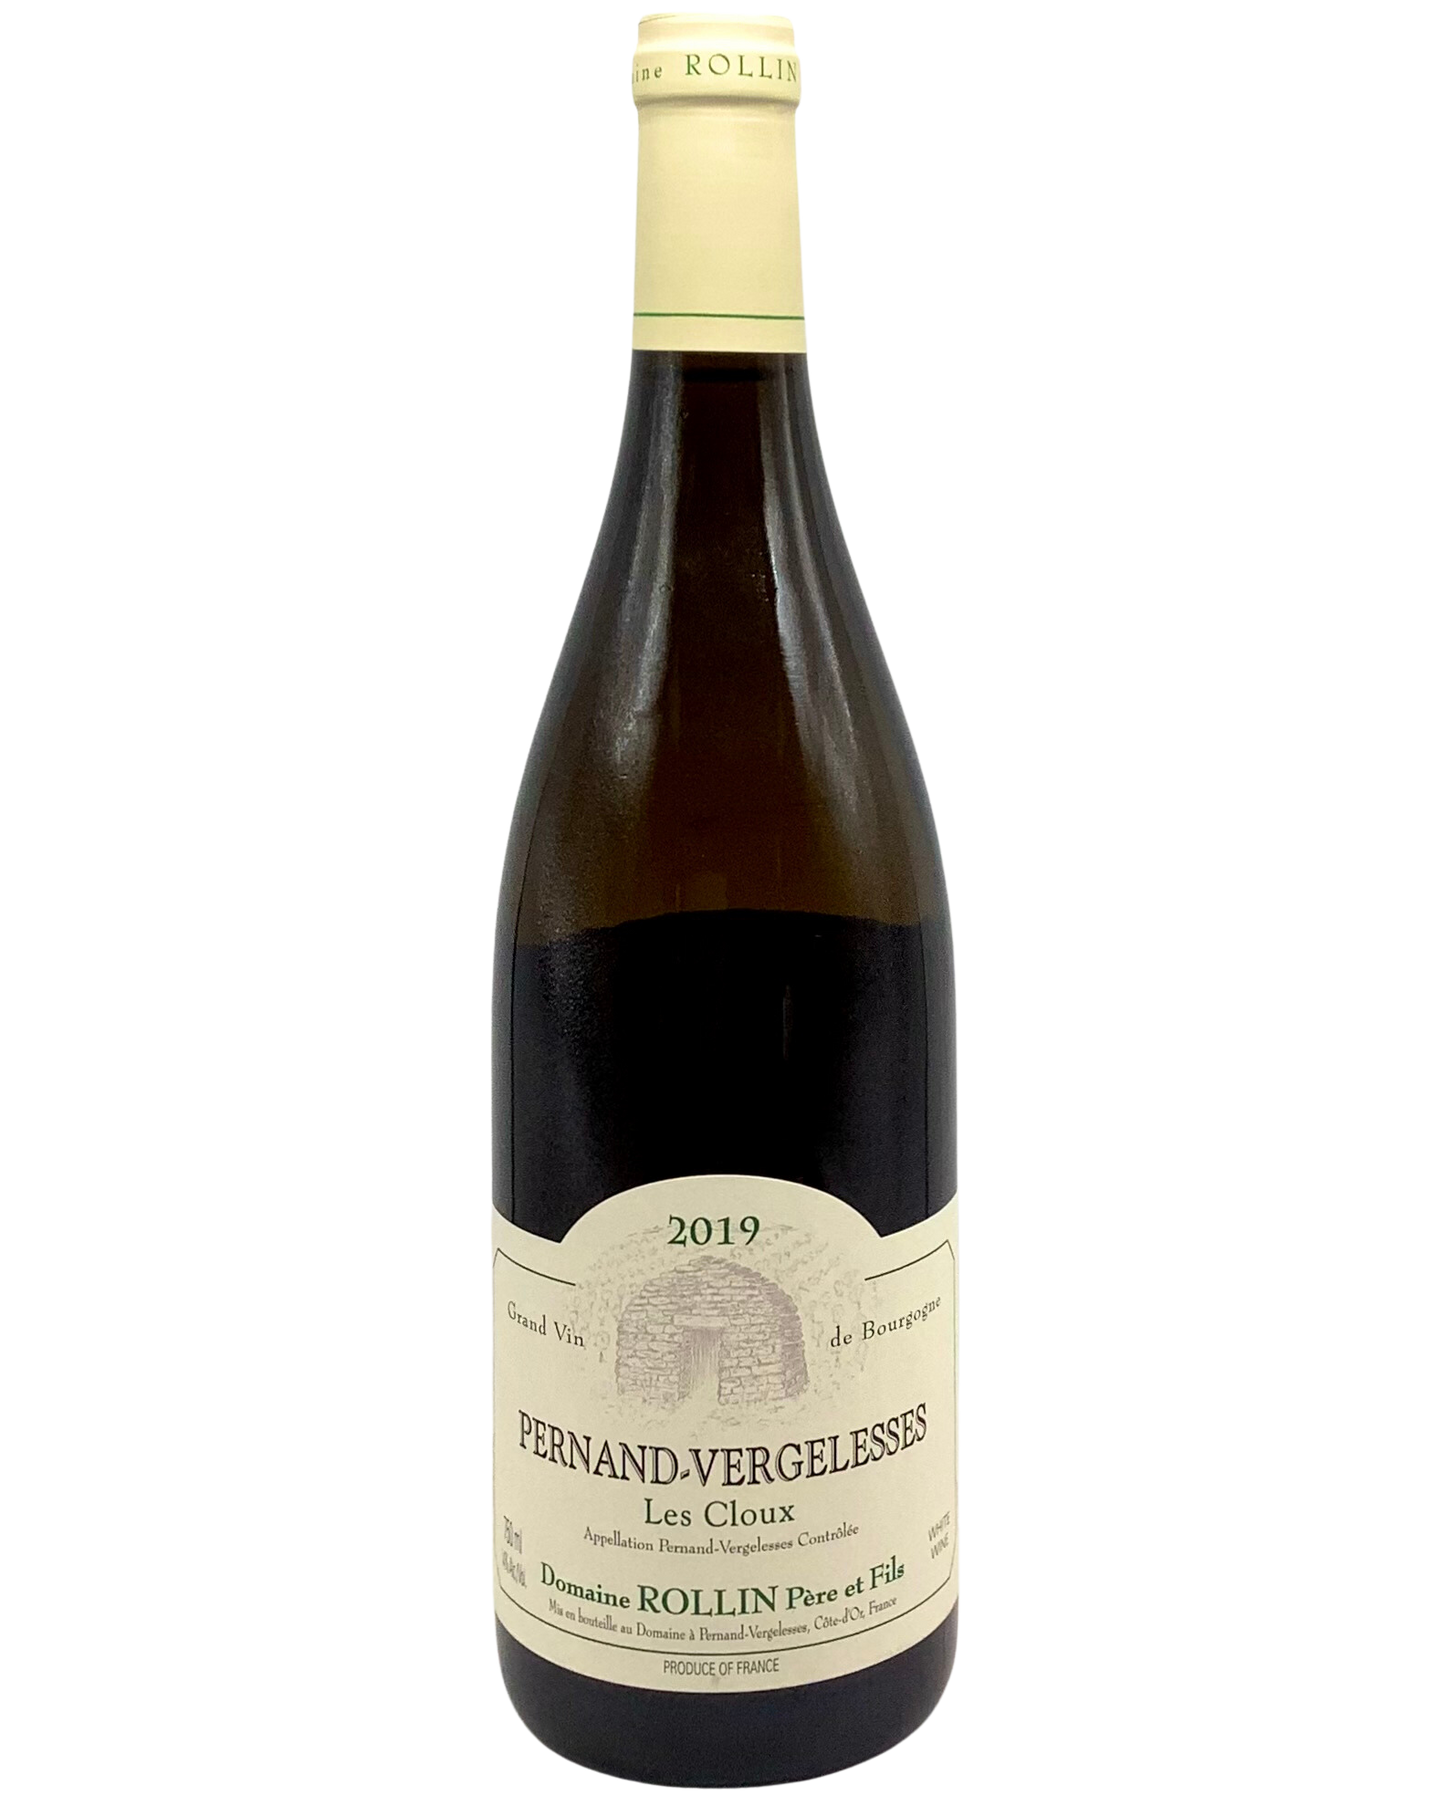 Domaine Rollin, Chardonnay, Pernand-Vergelesses "Les Cloux" Burgundy, France 2019